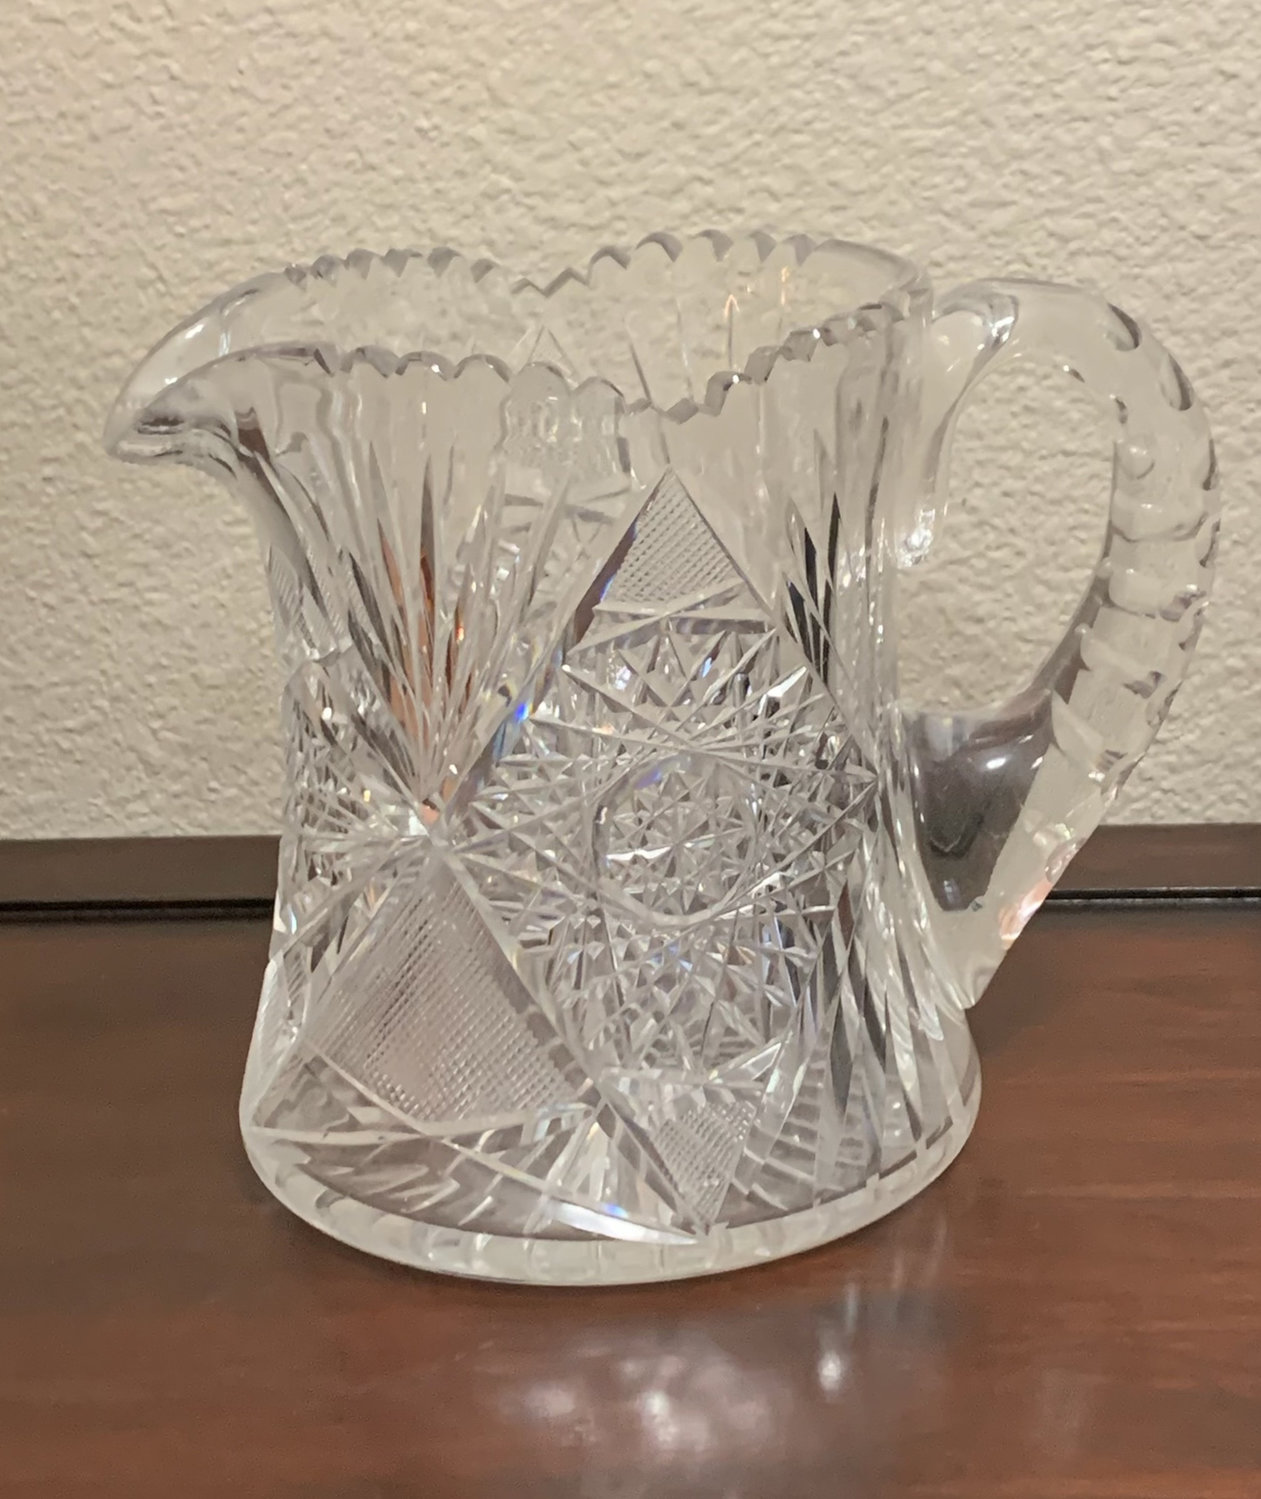 The cherished cut glass pitcher.